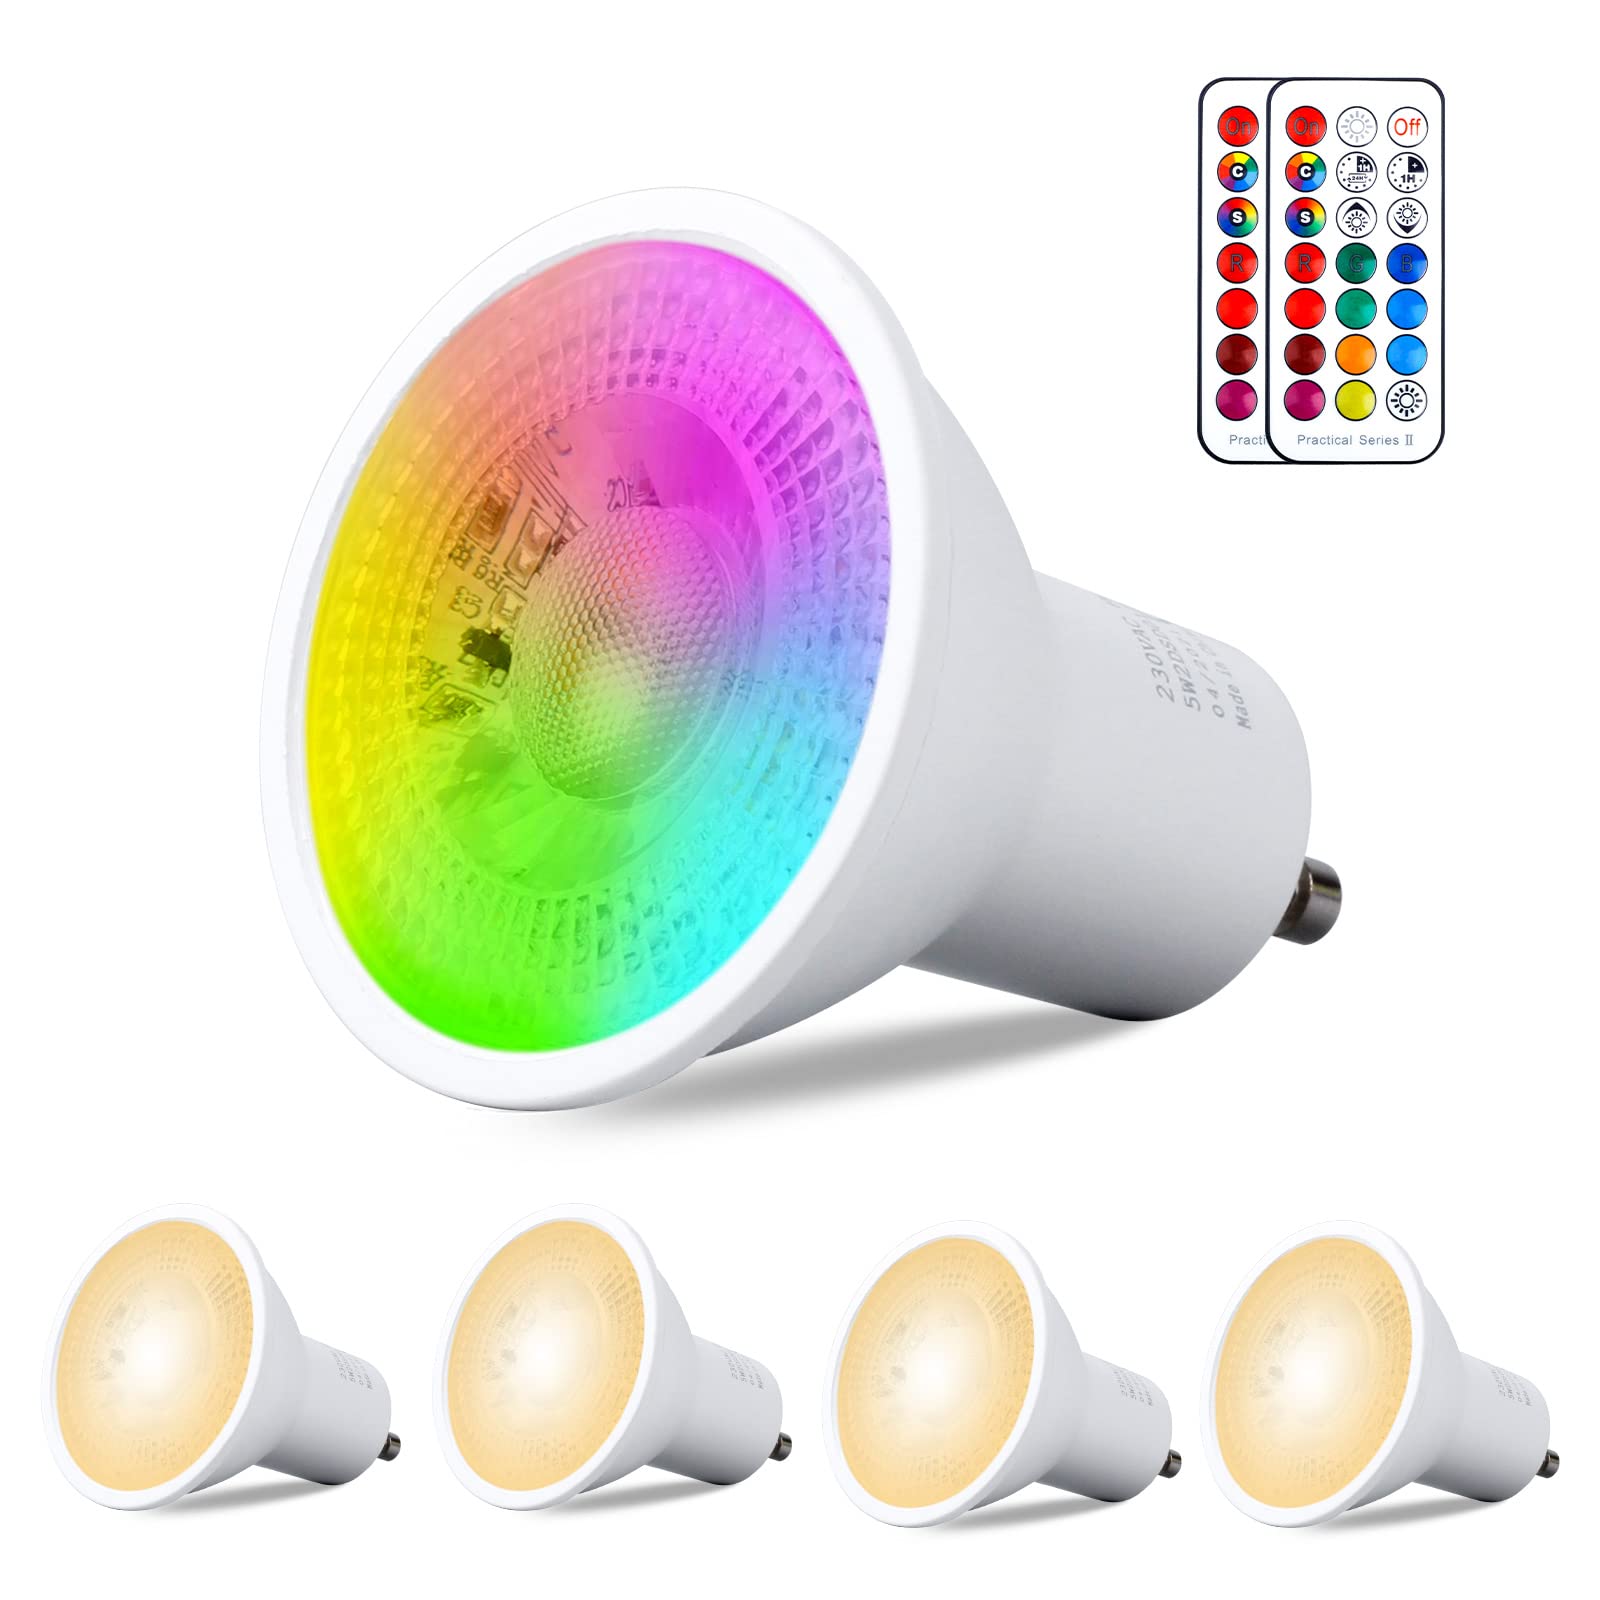 REYLAX GU10 RGB LED Farbwechsel Lampen, 5W Warmweiß 3000K Dimmbar Glühbirne 50W Halogenlampen Gleichwertige, RGB LED Strahler Bunt, LED Spot Leuchtmittel mit Fernbedienung (4 Stück)